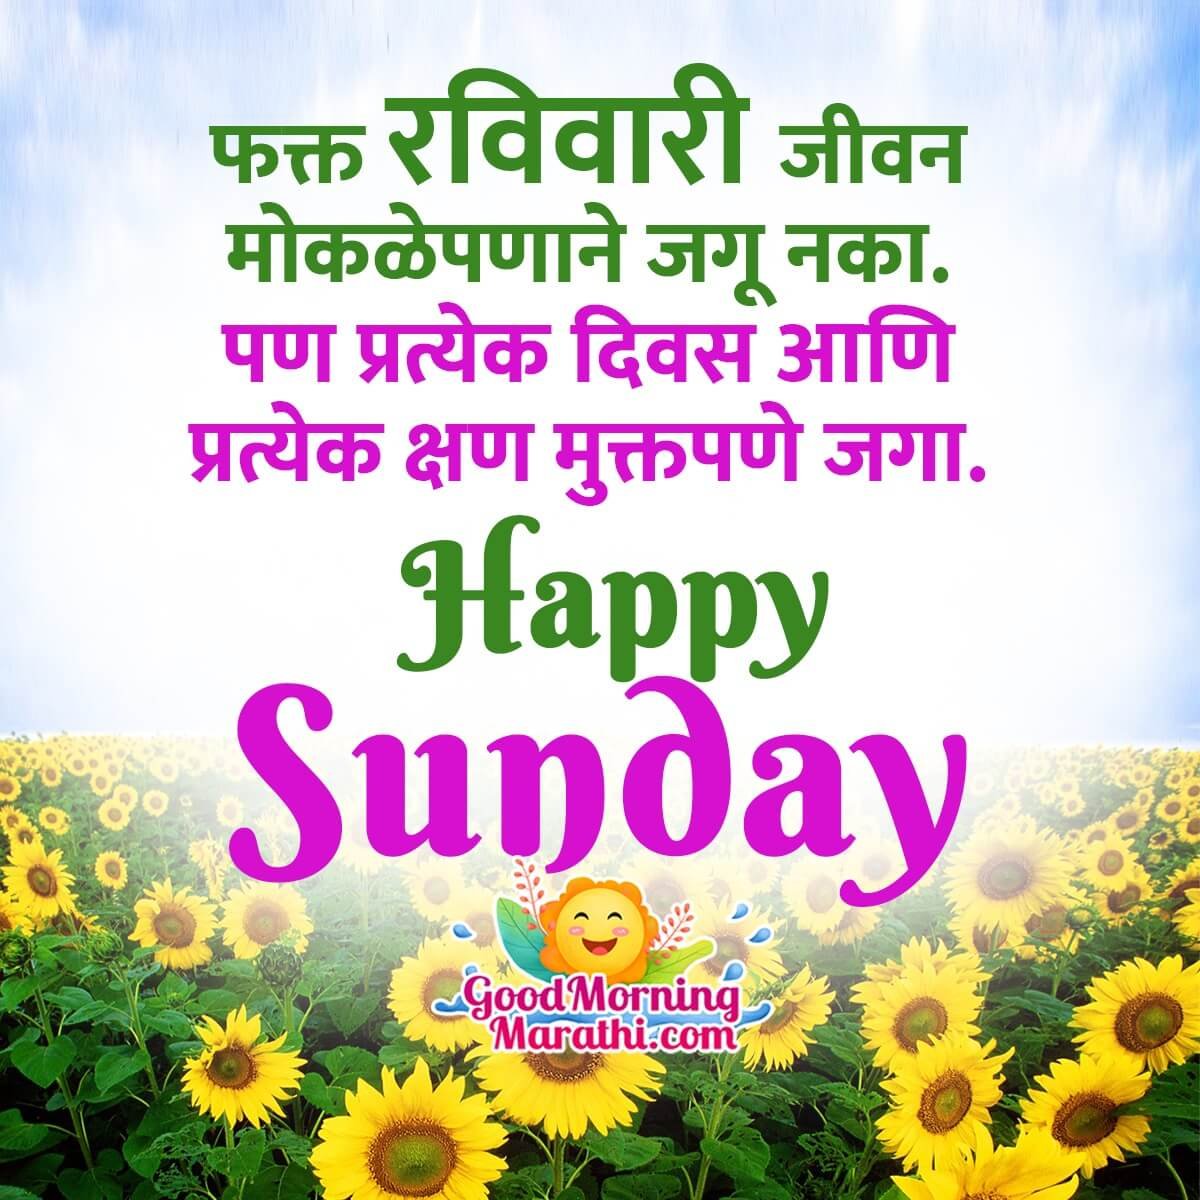 Sunday Messages In Marathi